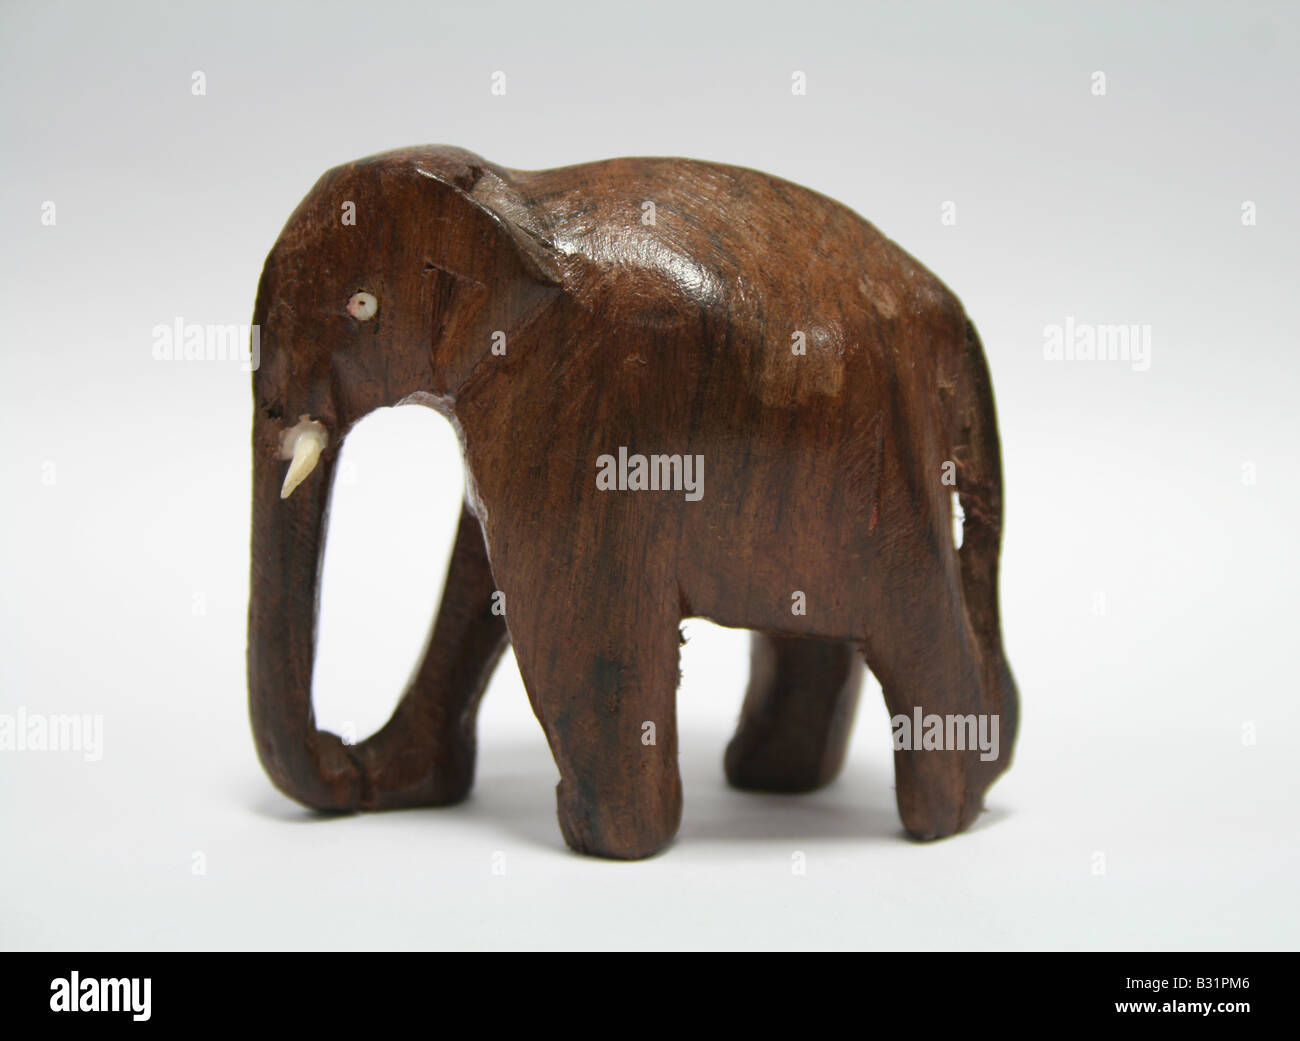 toy wooden elephant Stock Photo